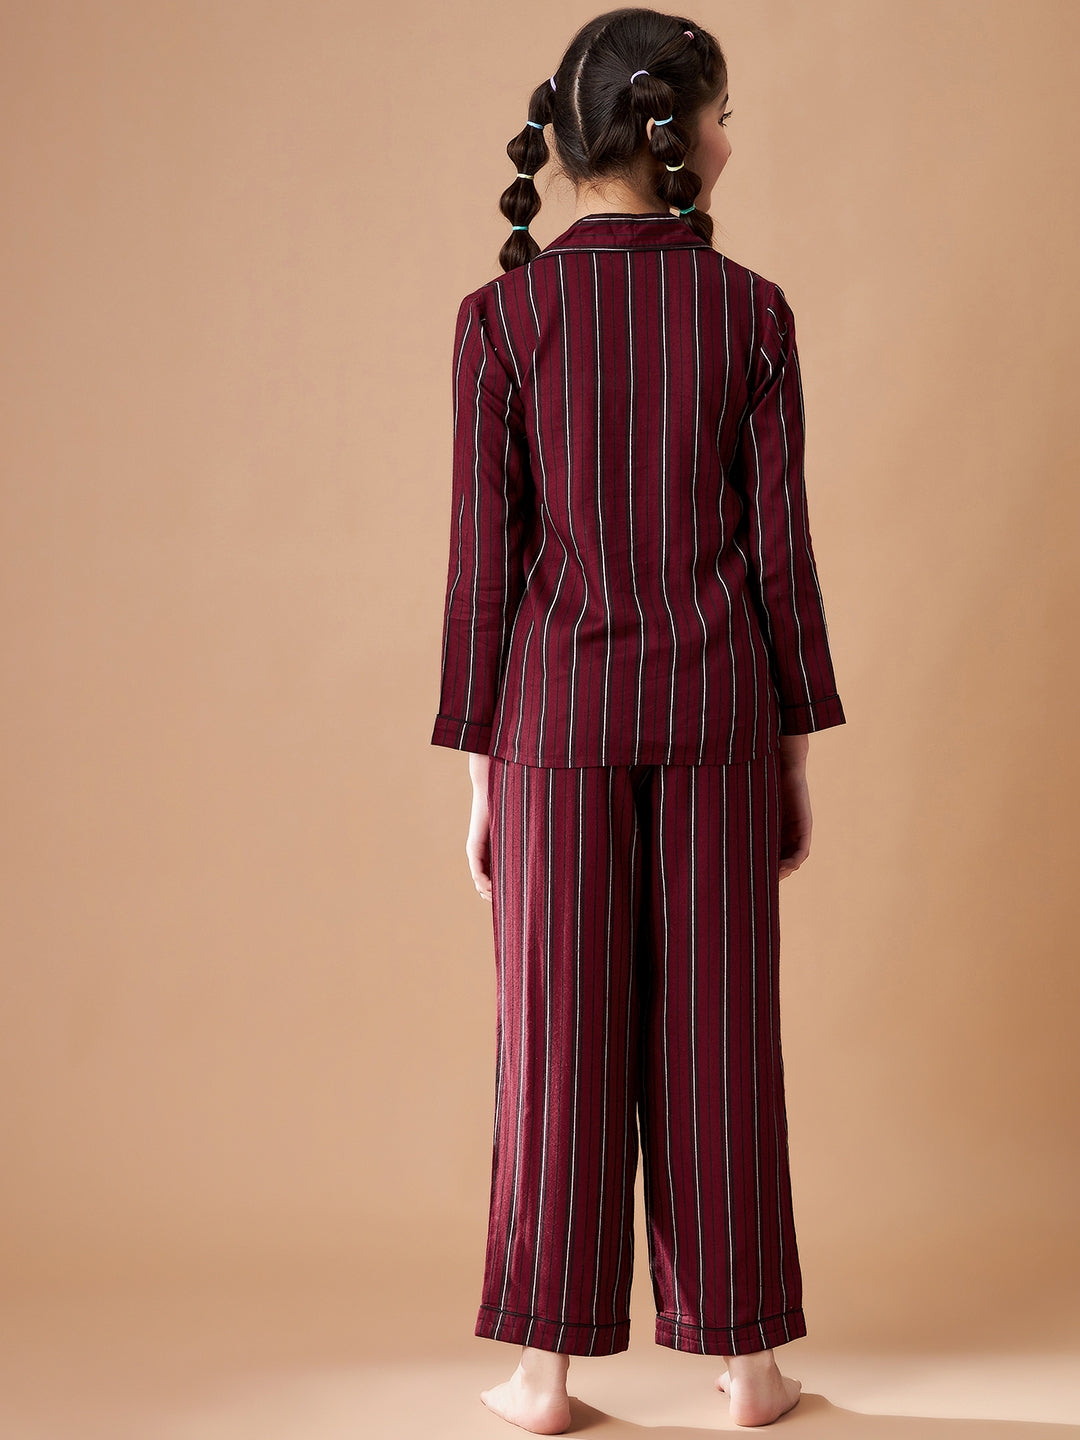 Girls Maroon Striped Cotton Night Suit Set